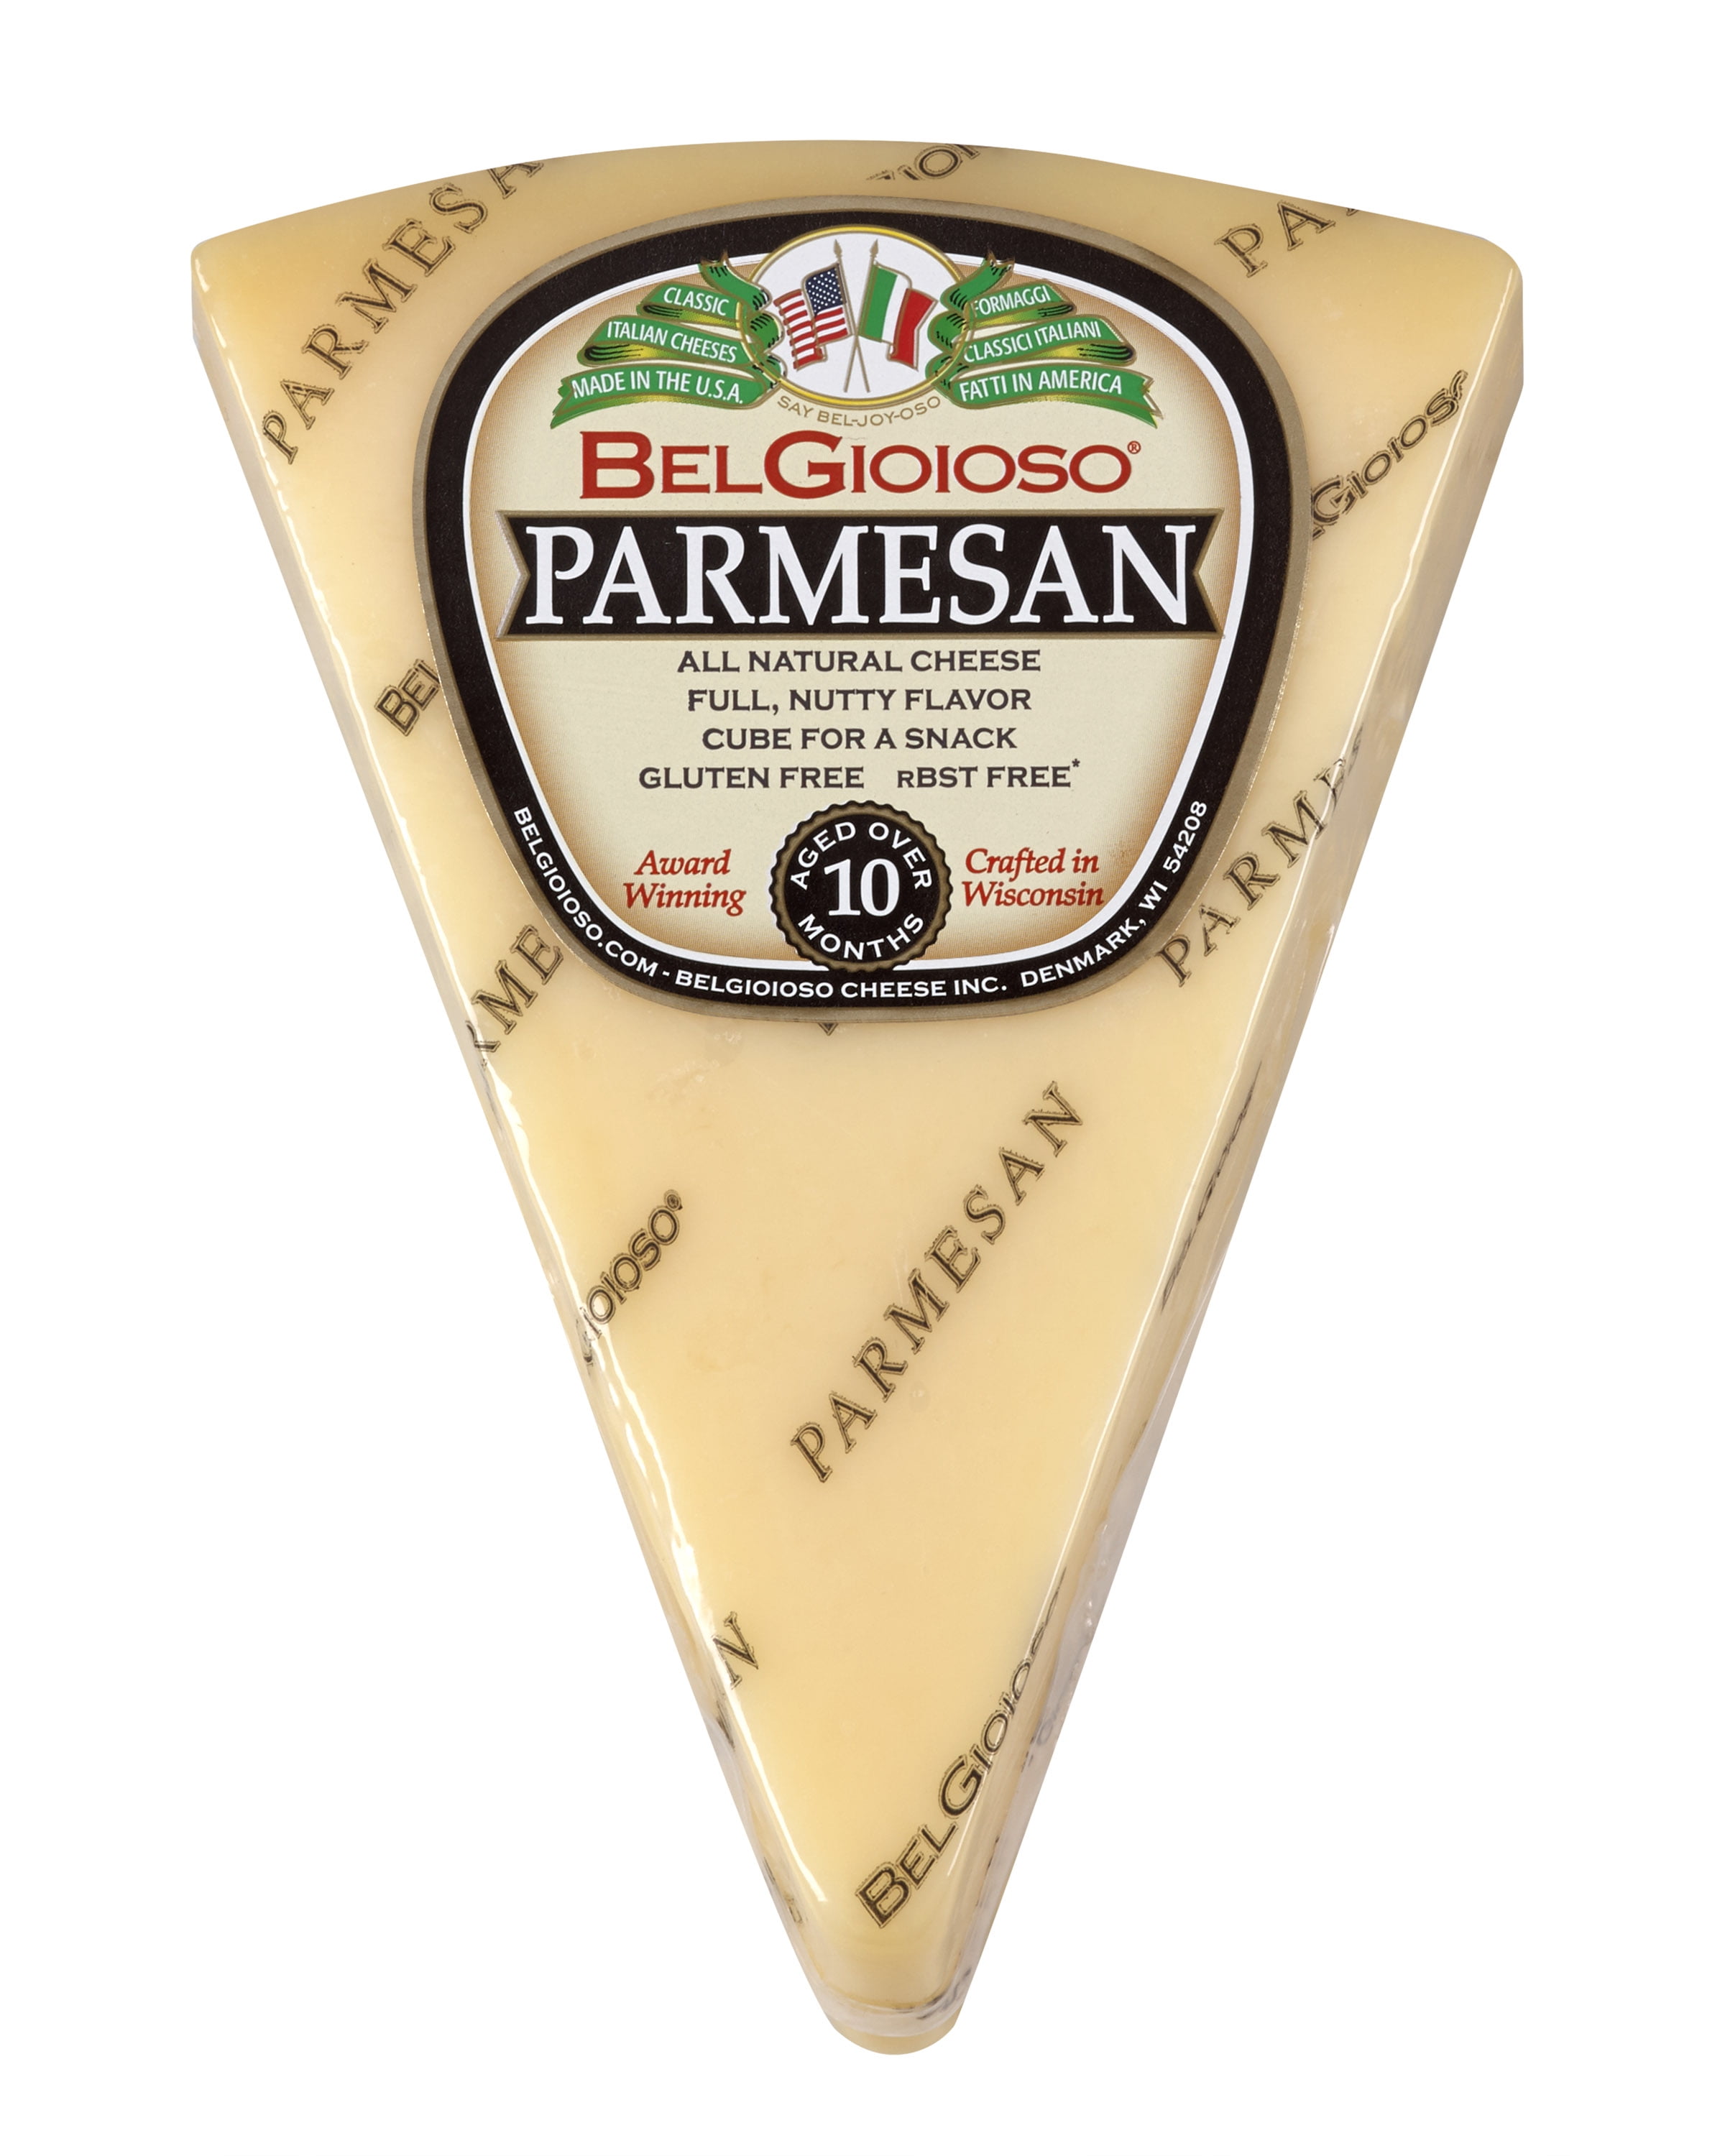 Belgioioso Parmesan Cheese Wedge Specialty Cheese 8 Oz Walmart Com Walmart Com,Cod Recipes Healthy